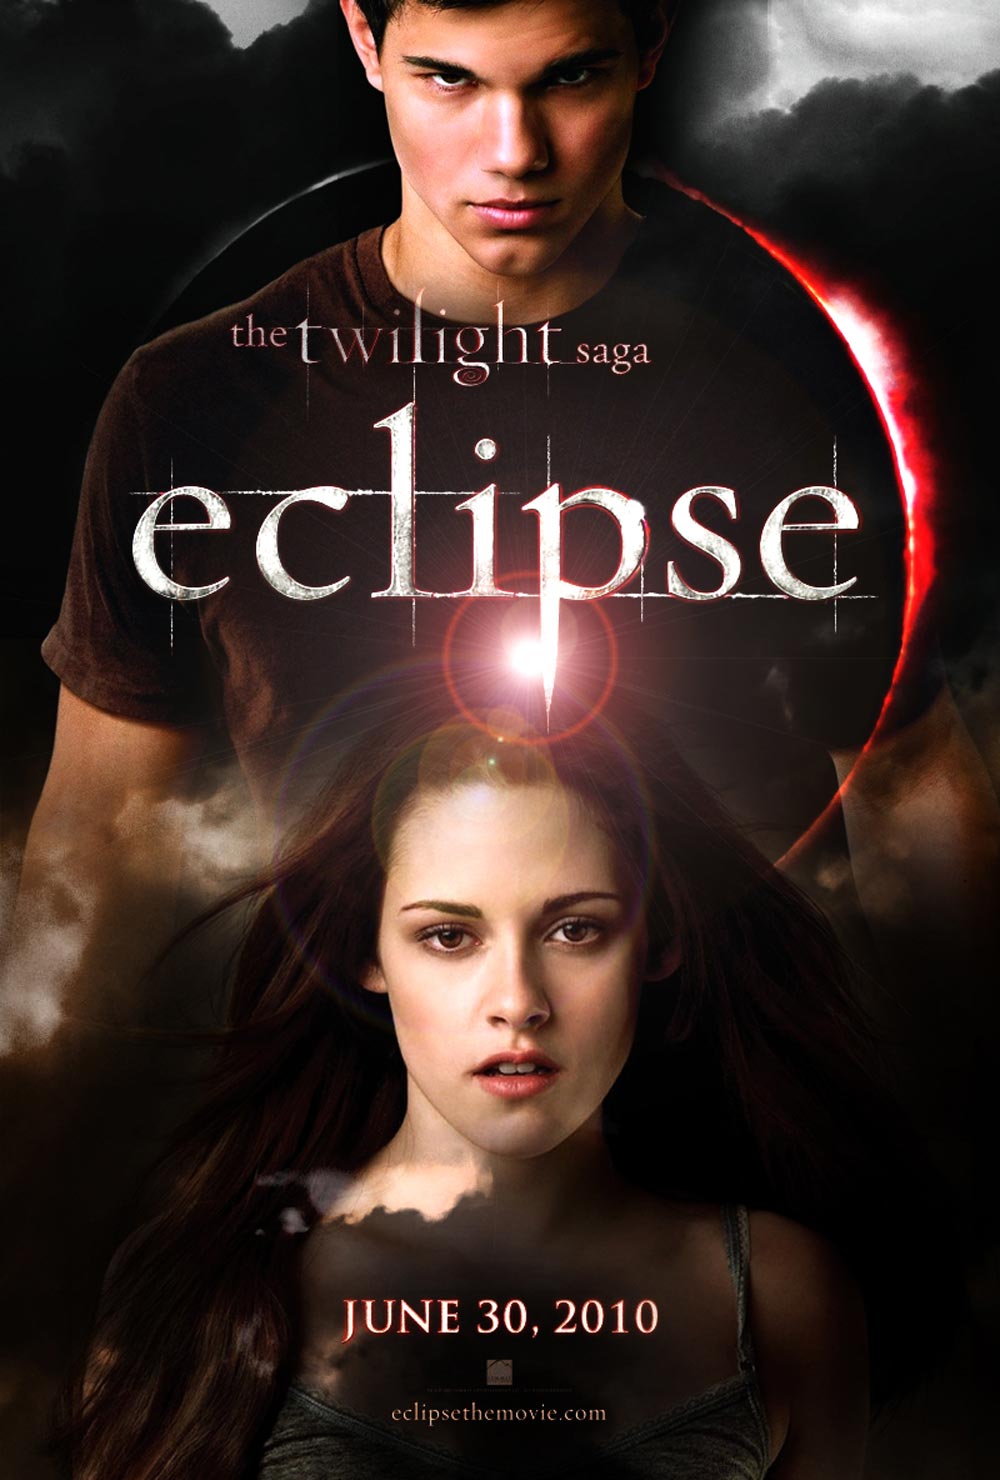 MKV movie Download: The Twilight Saga: Eclipse